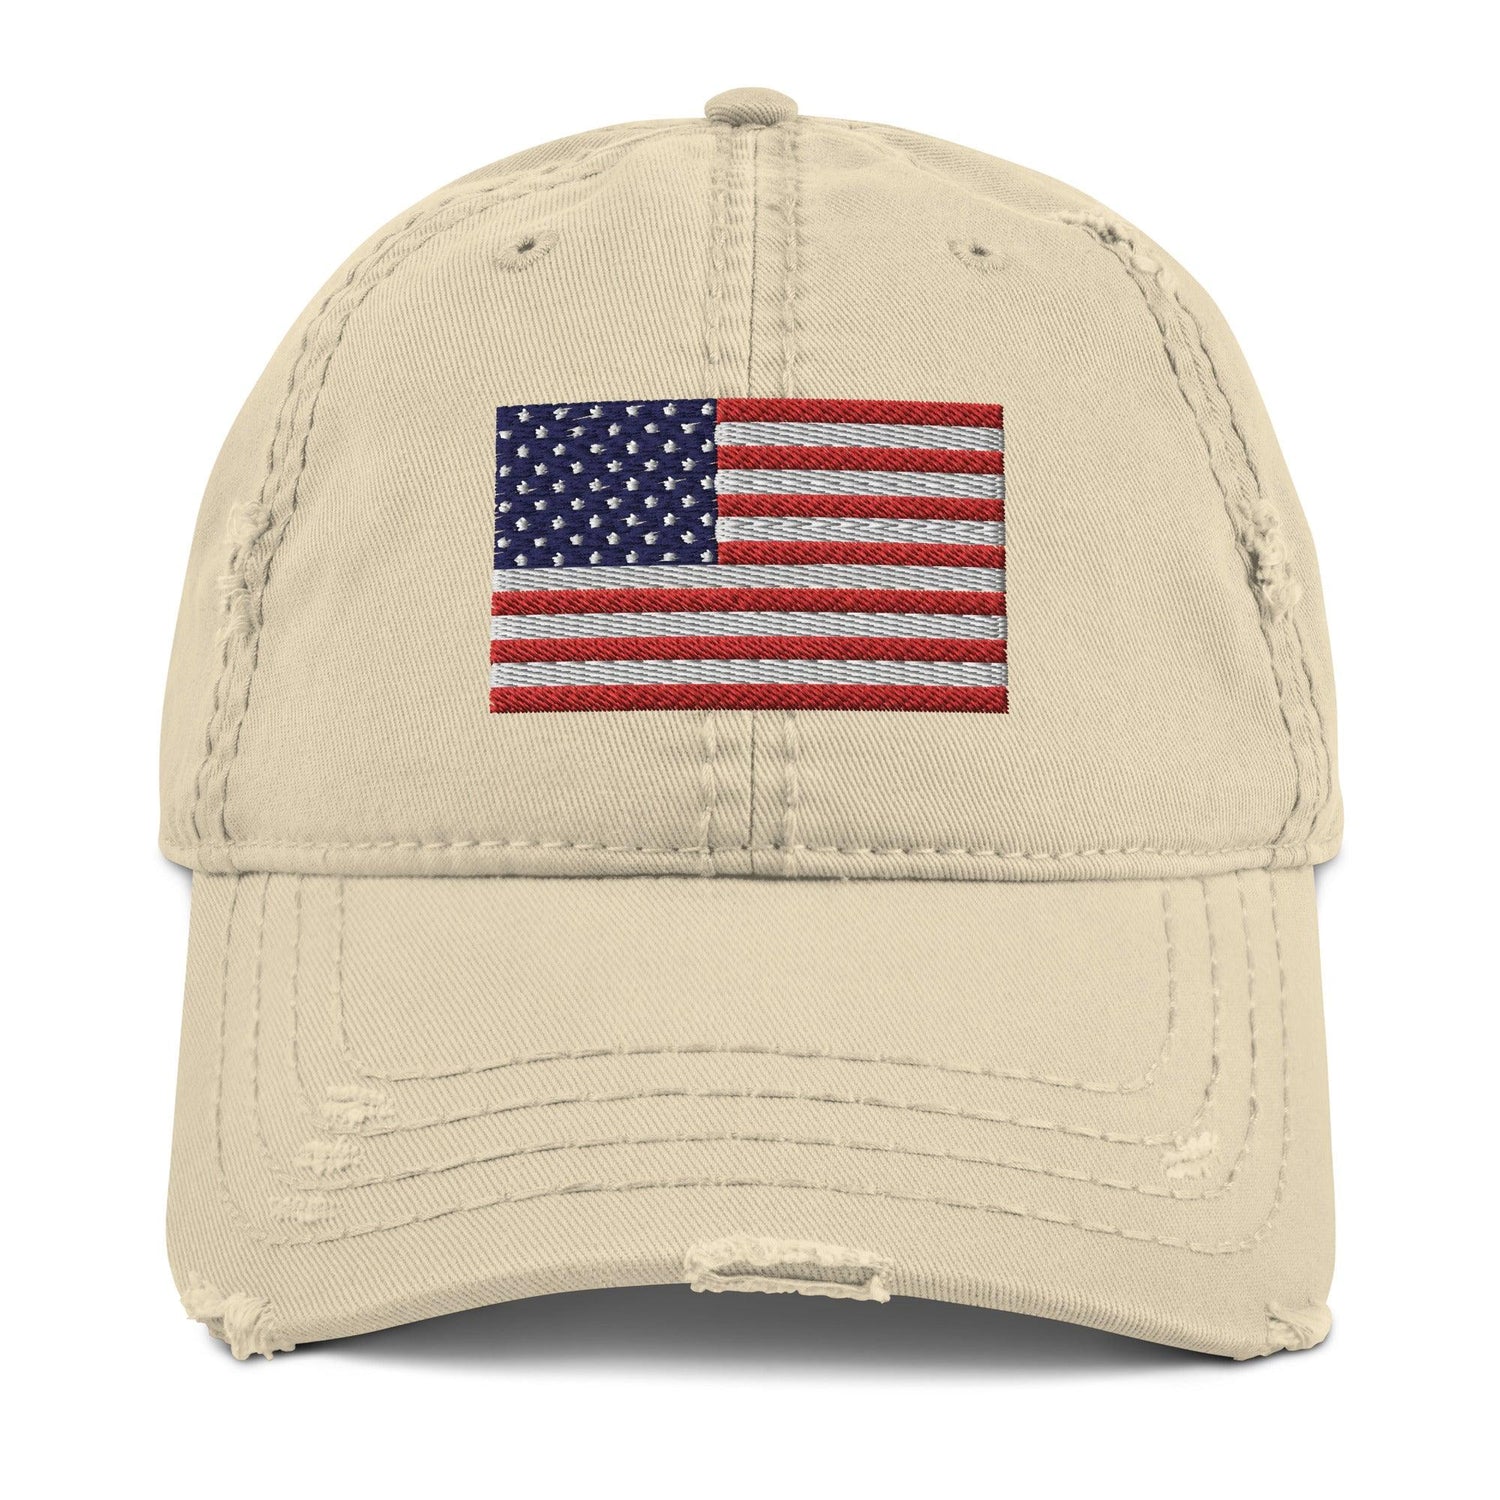 Embordered American Flag Distressed Dad Hat